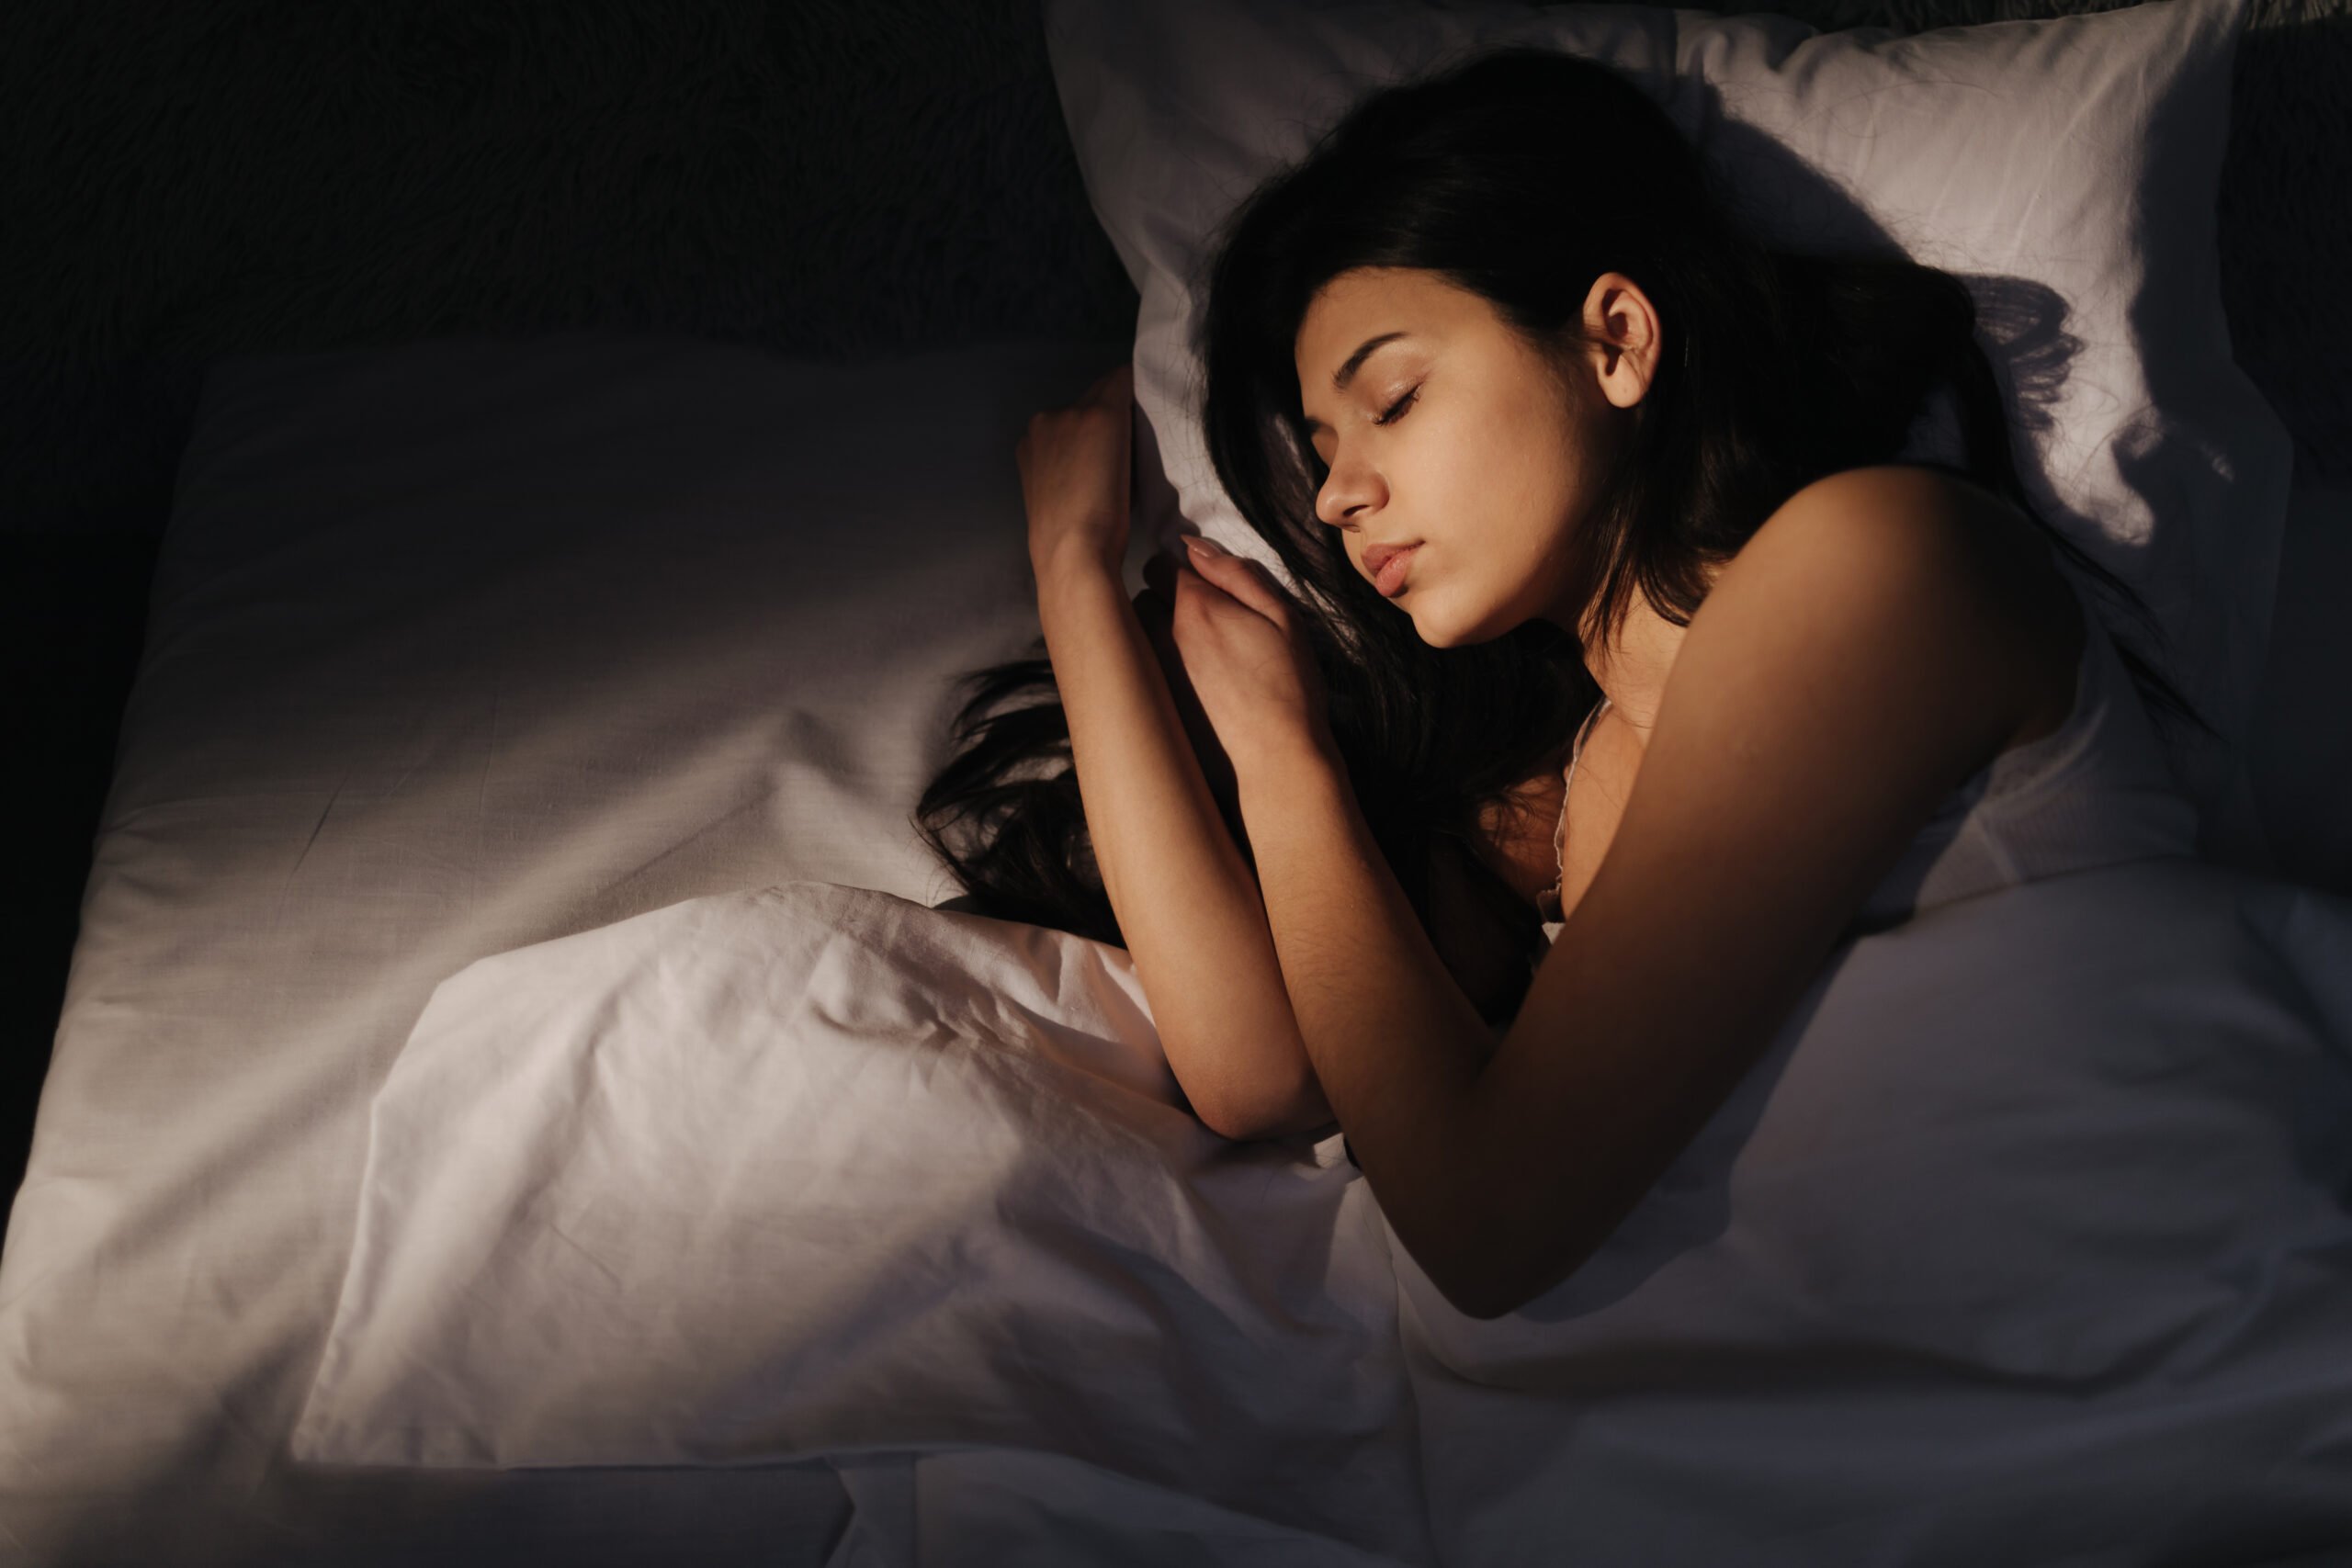 Introducing Quviviq - a New Treatment for Insomnia